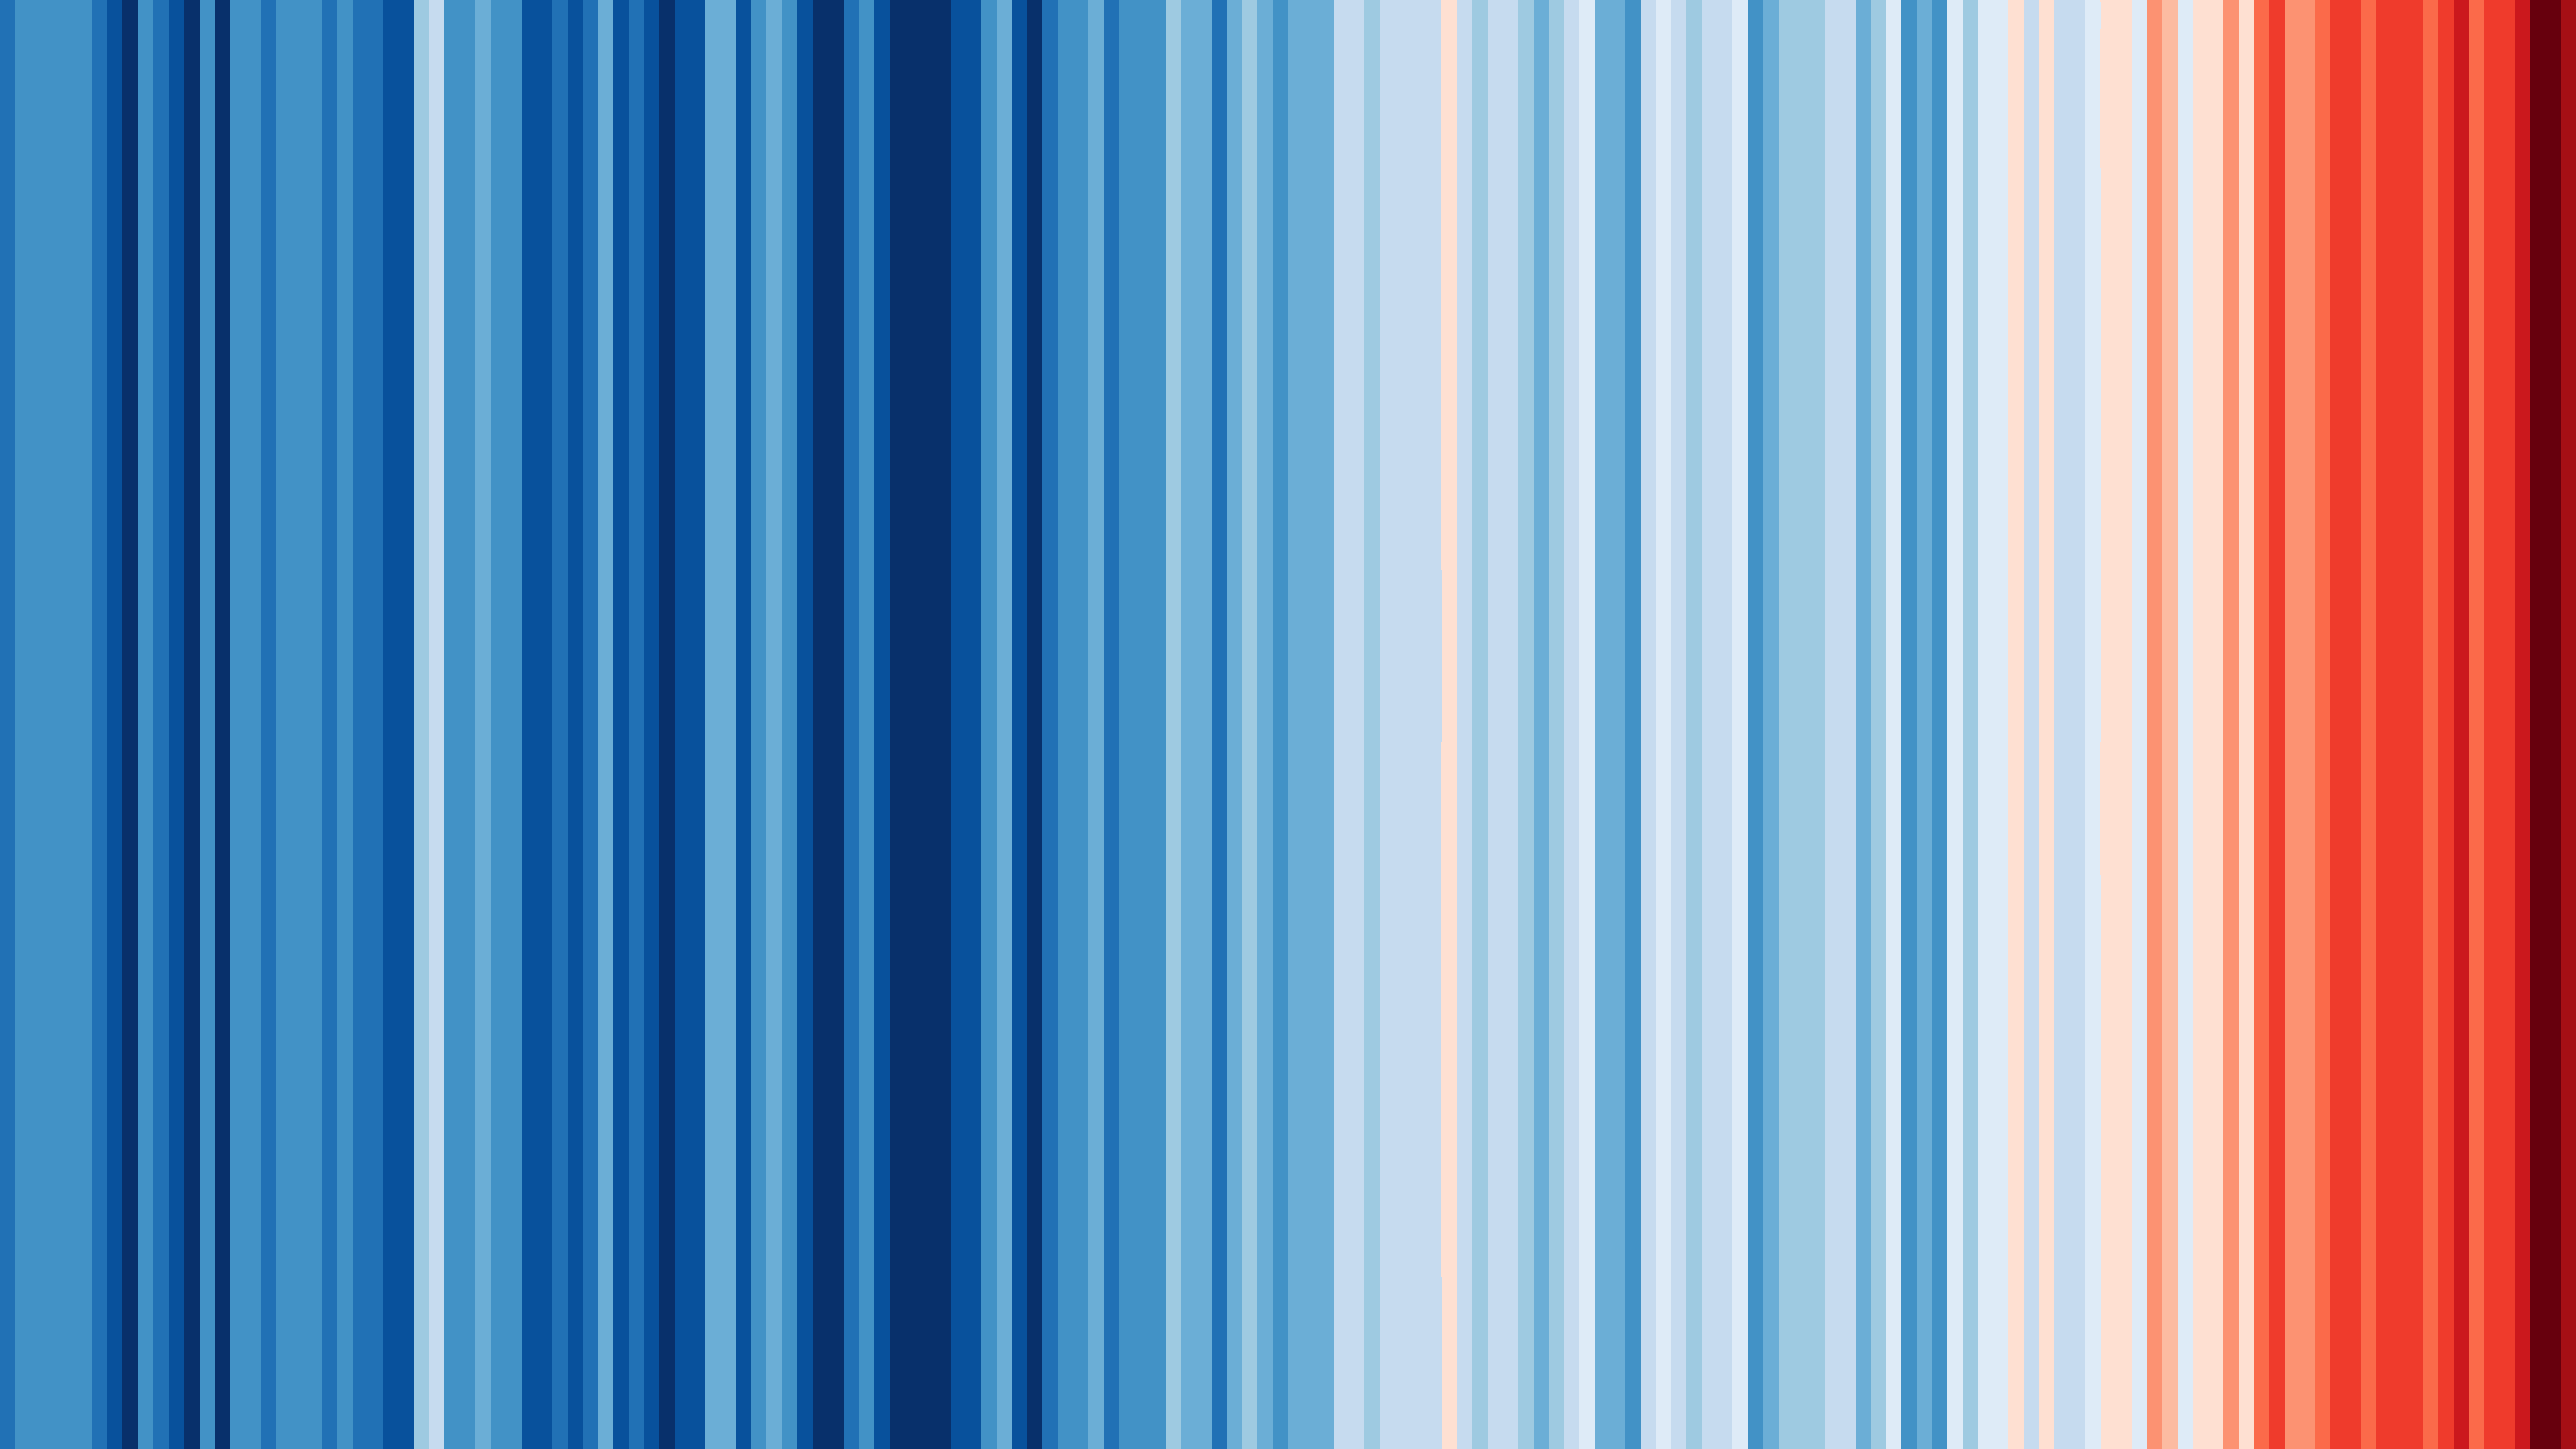 Climate stripes - University of Reading